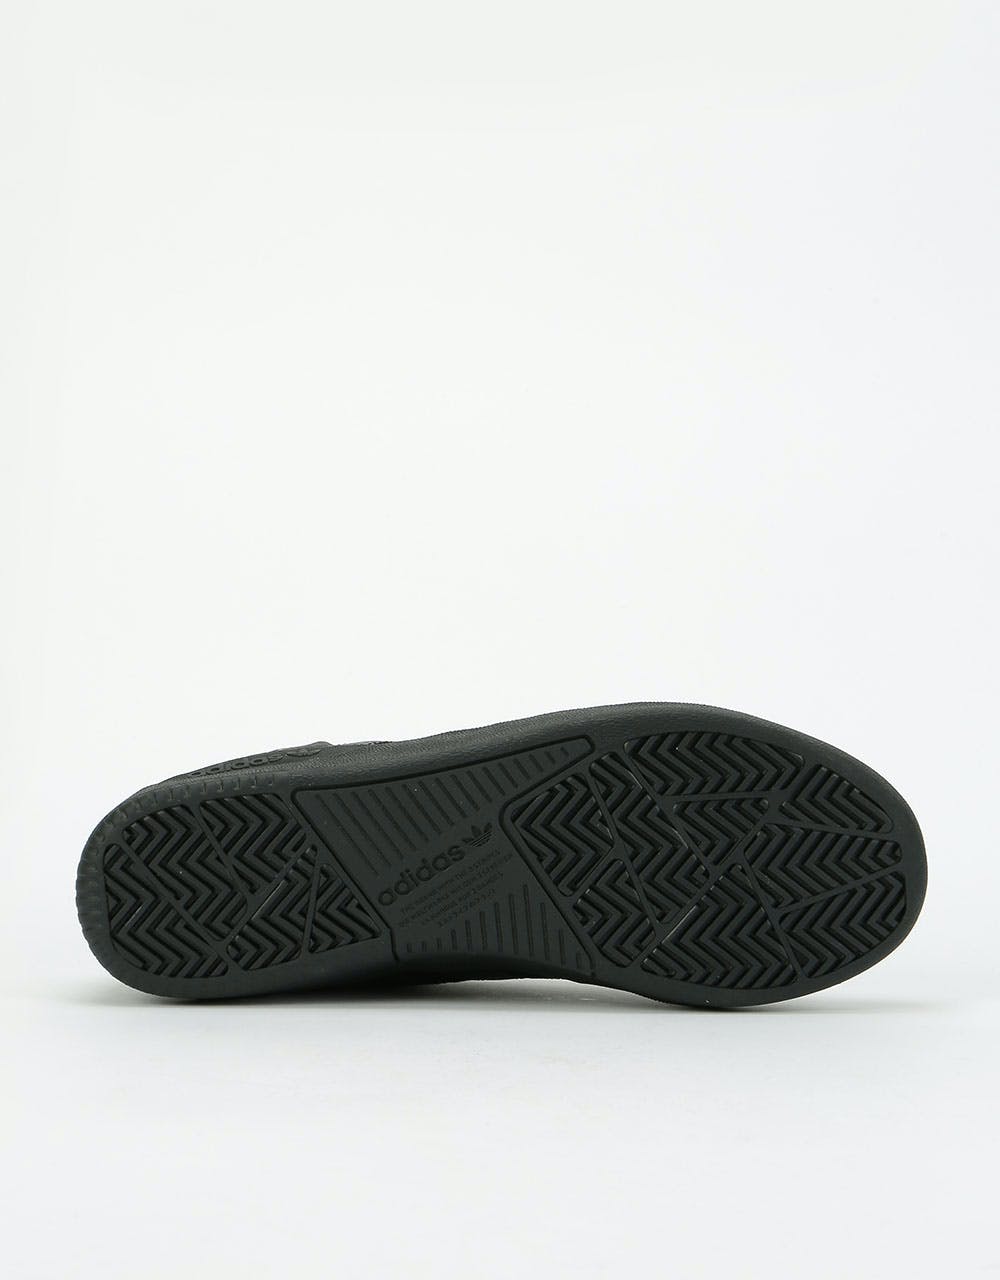 Adidas Tyshawn Skate Shoes - Core Black/Core Black/Gold Metallic